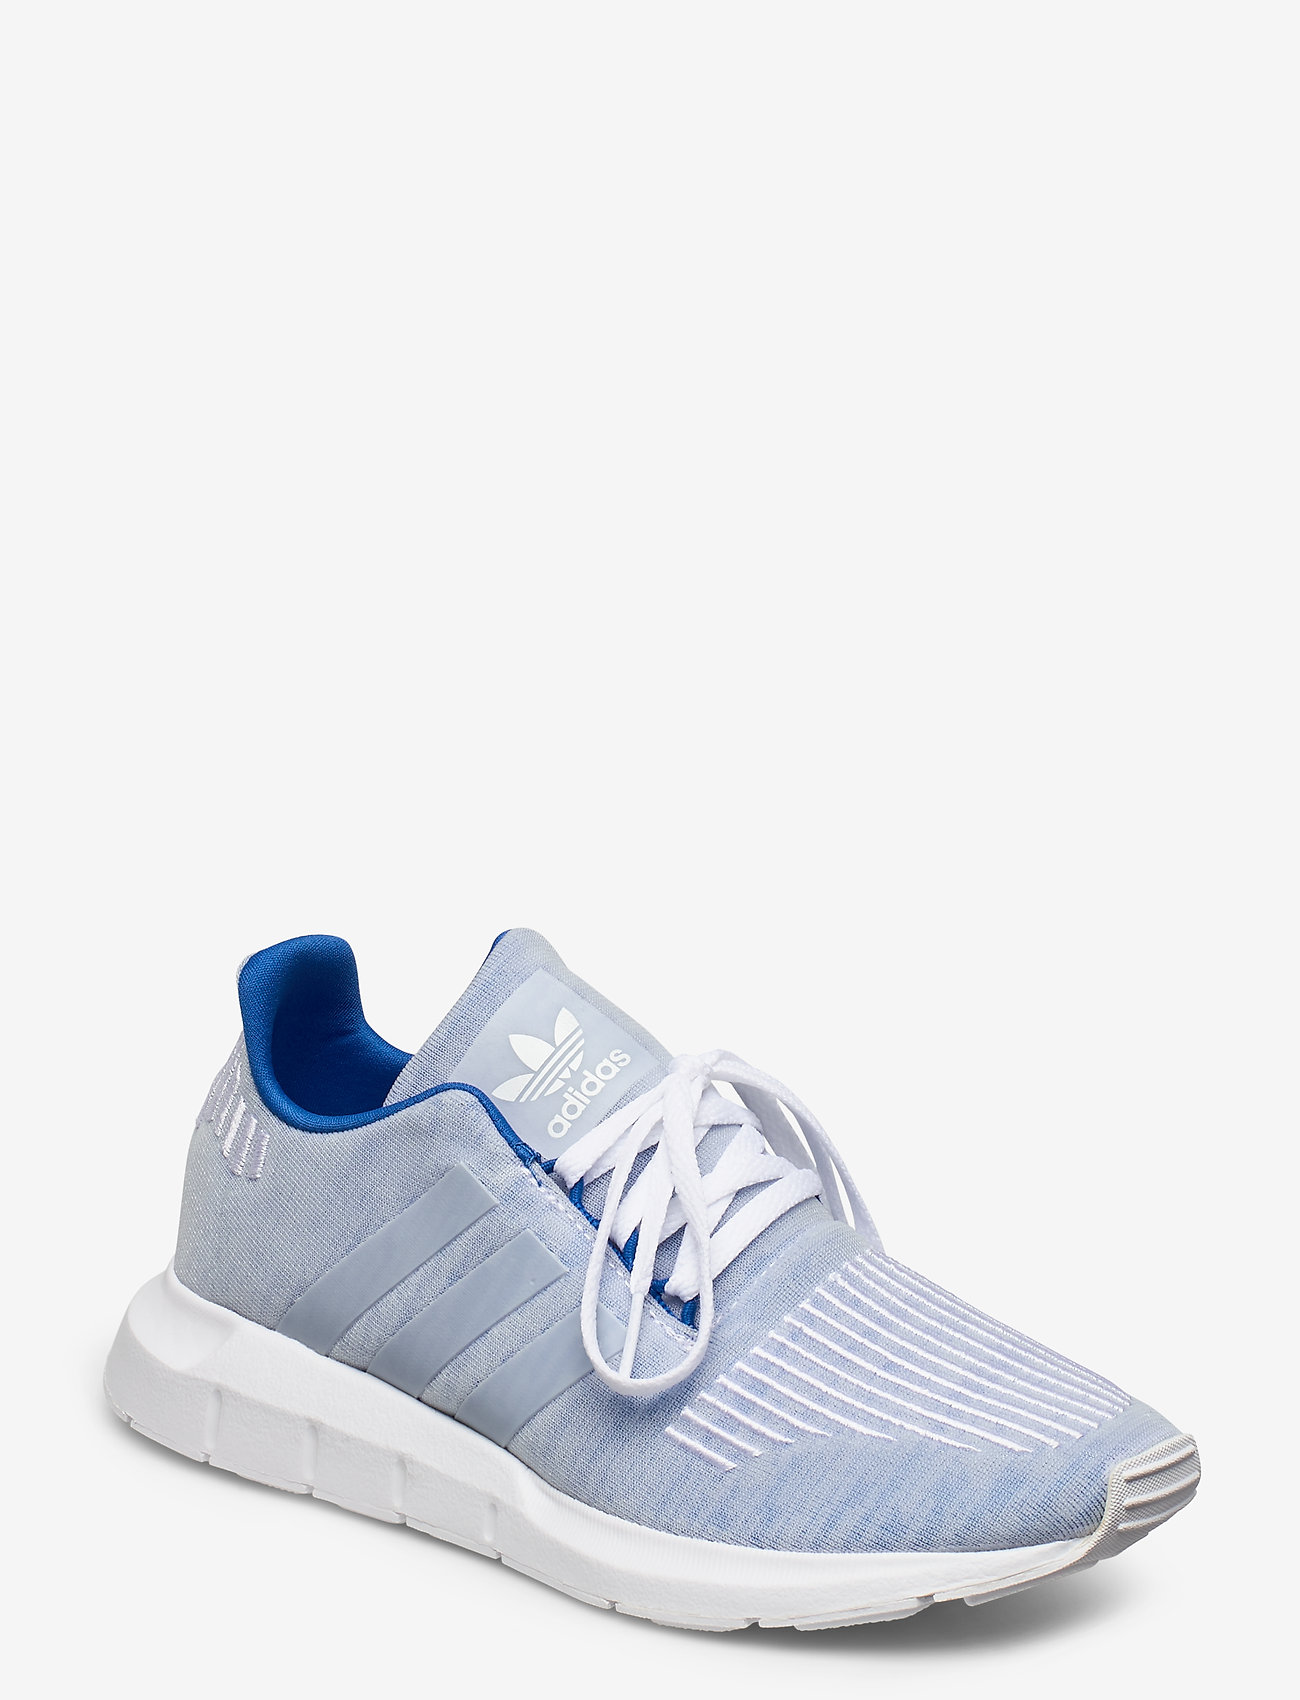 adidas swift run blue & white shoes